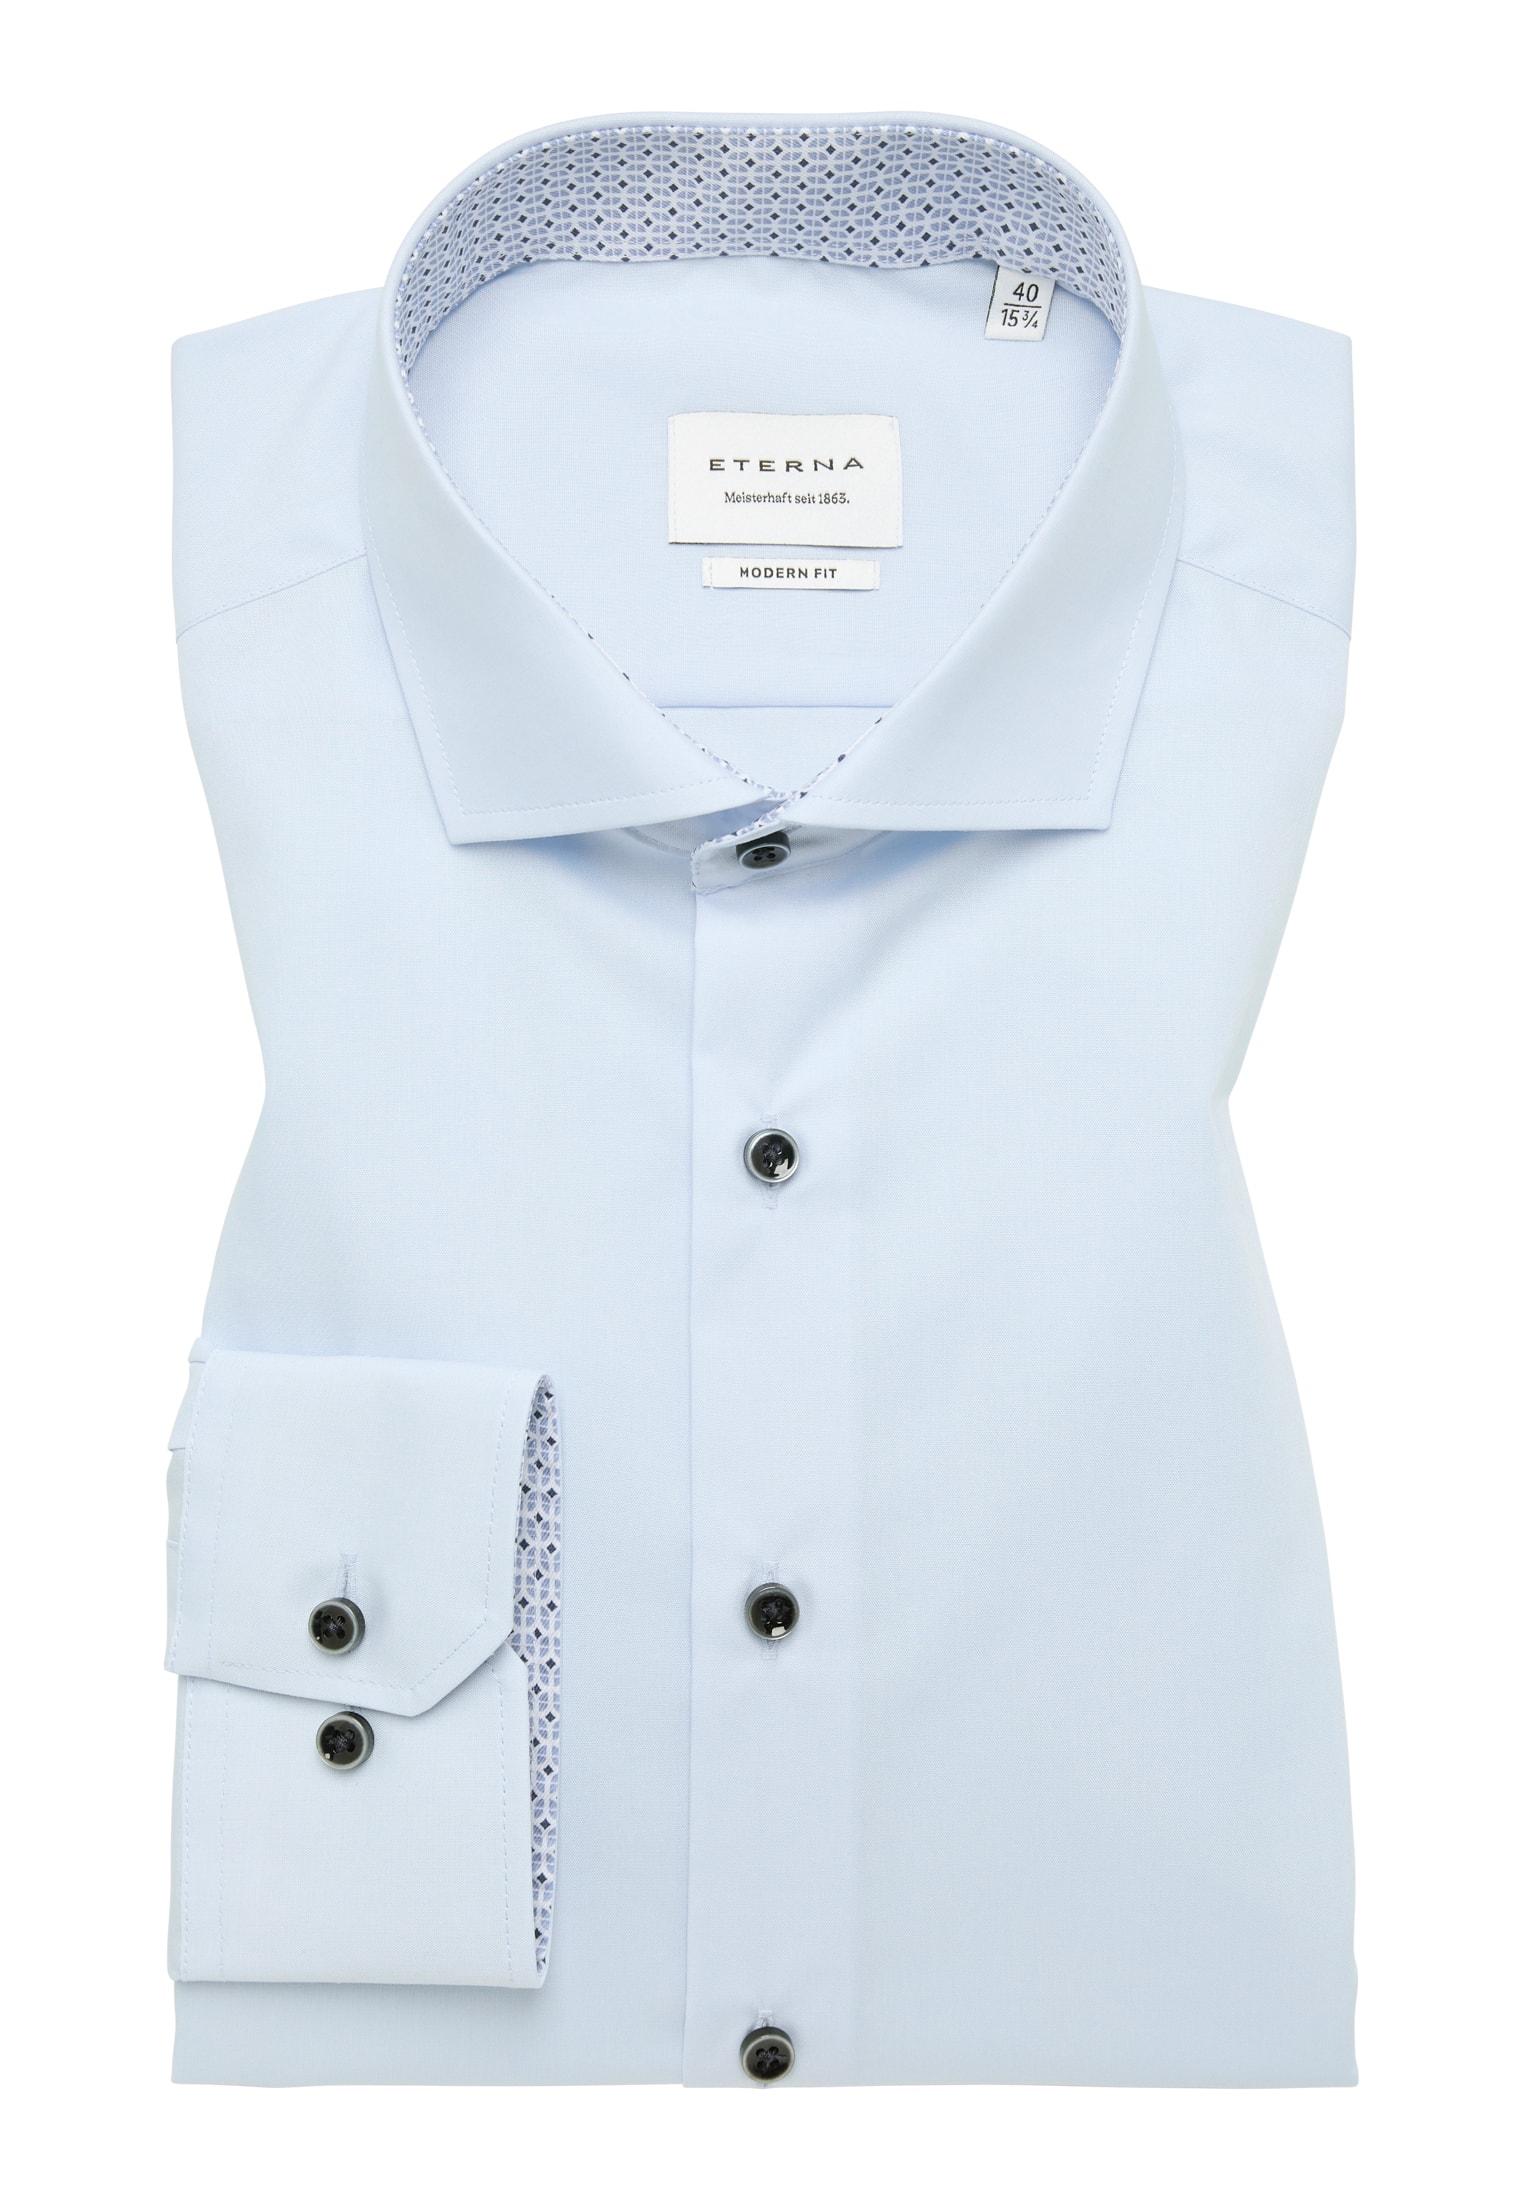 MODERN FIT Original Shirt in himmelblau unifarben | himmelblau | 44 |  Langarm | 1SH12860-01-12-44-1/1 | Regenjacken